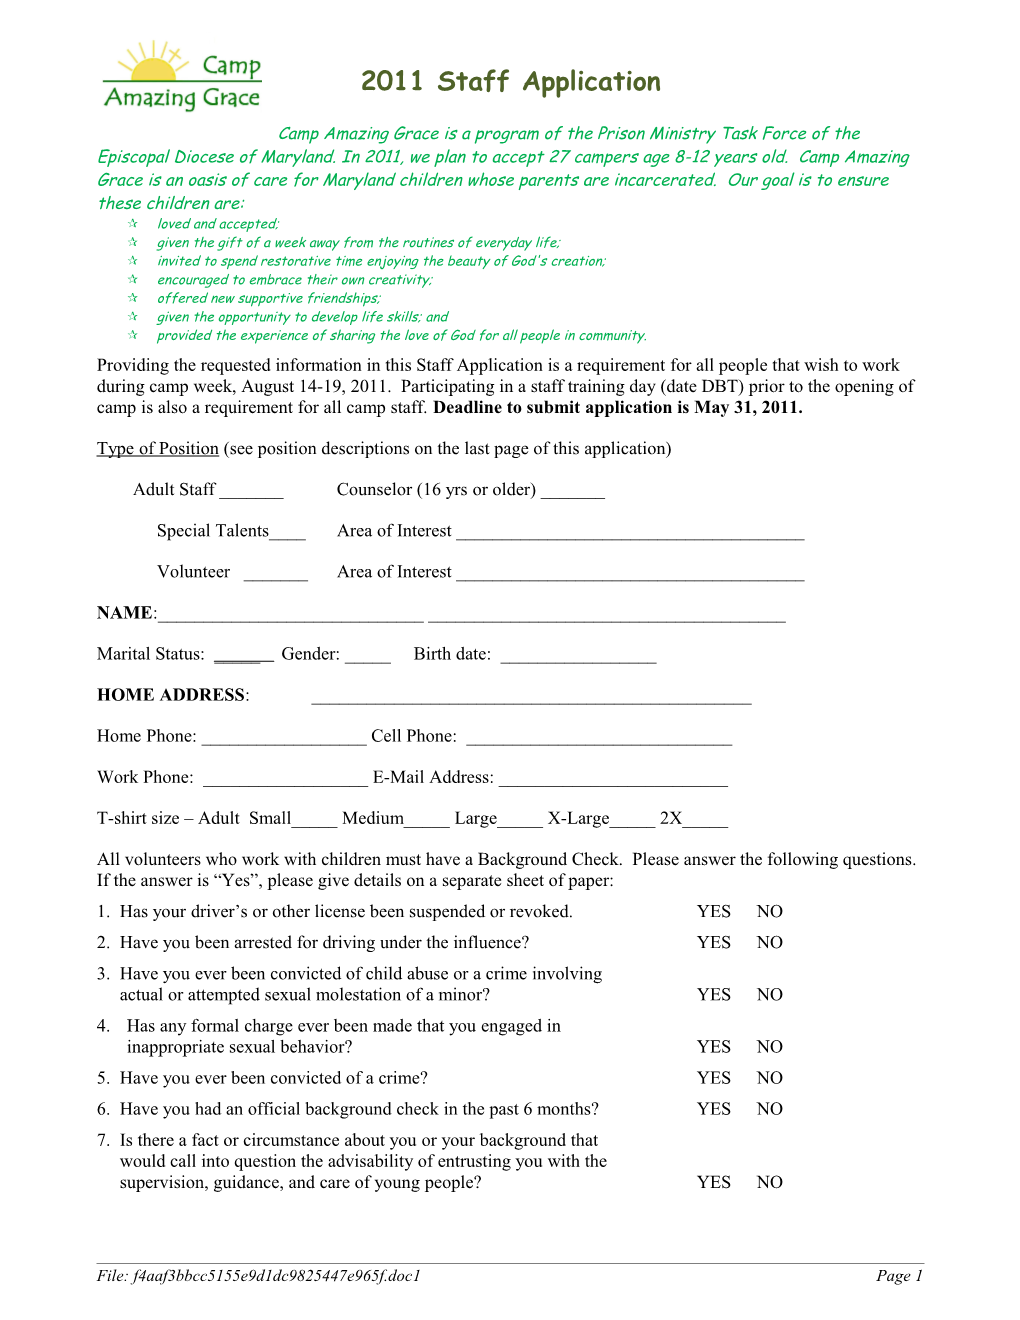 Application for Bishop Claggett Center s1